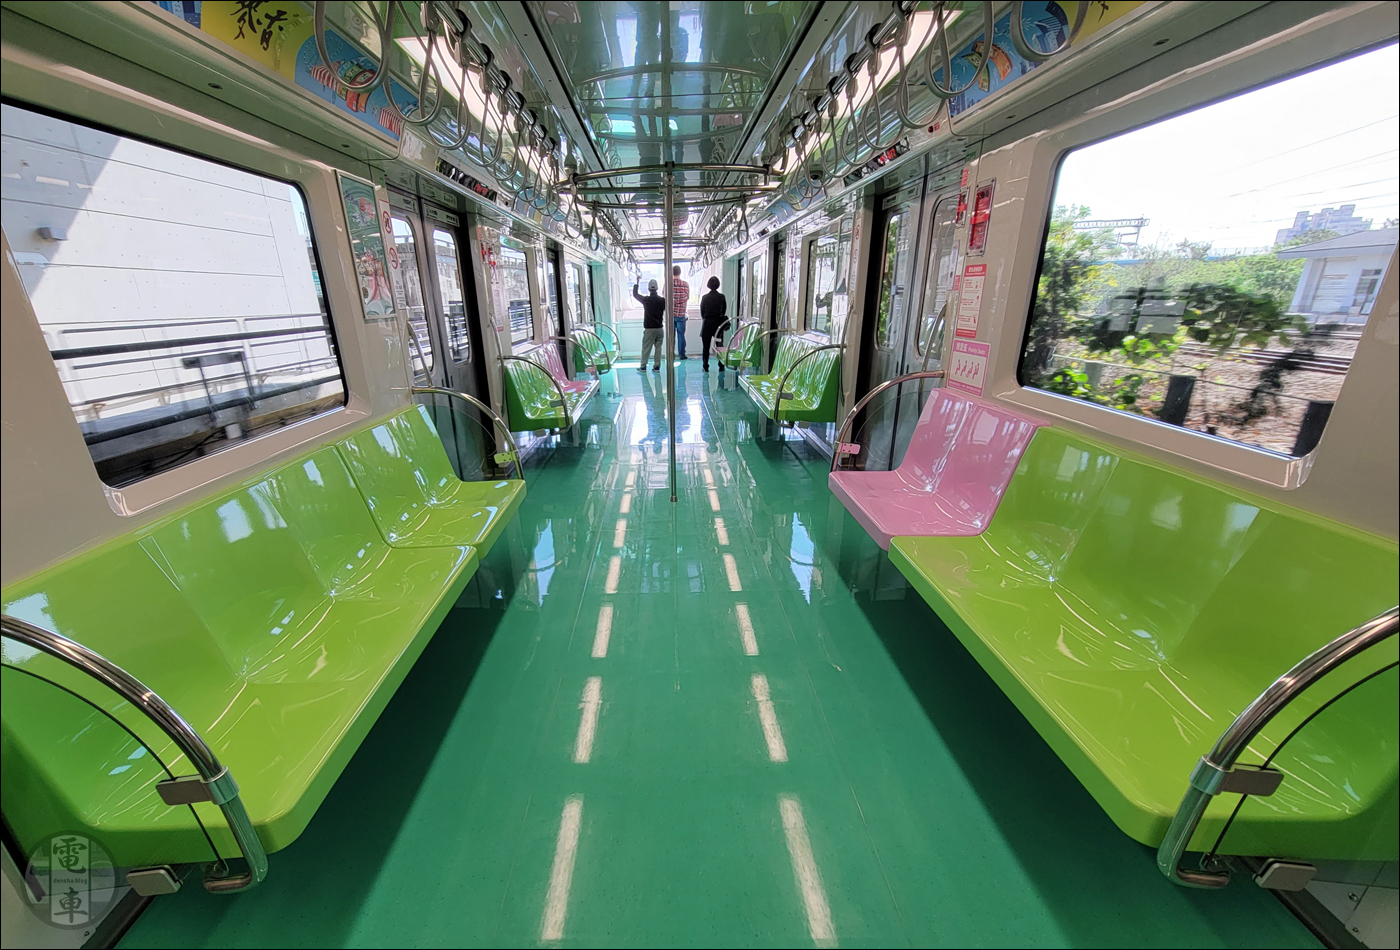 A Taichung Metro járműveinek utastere.